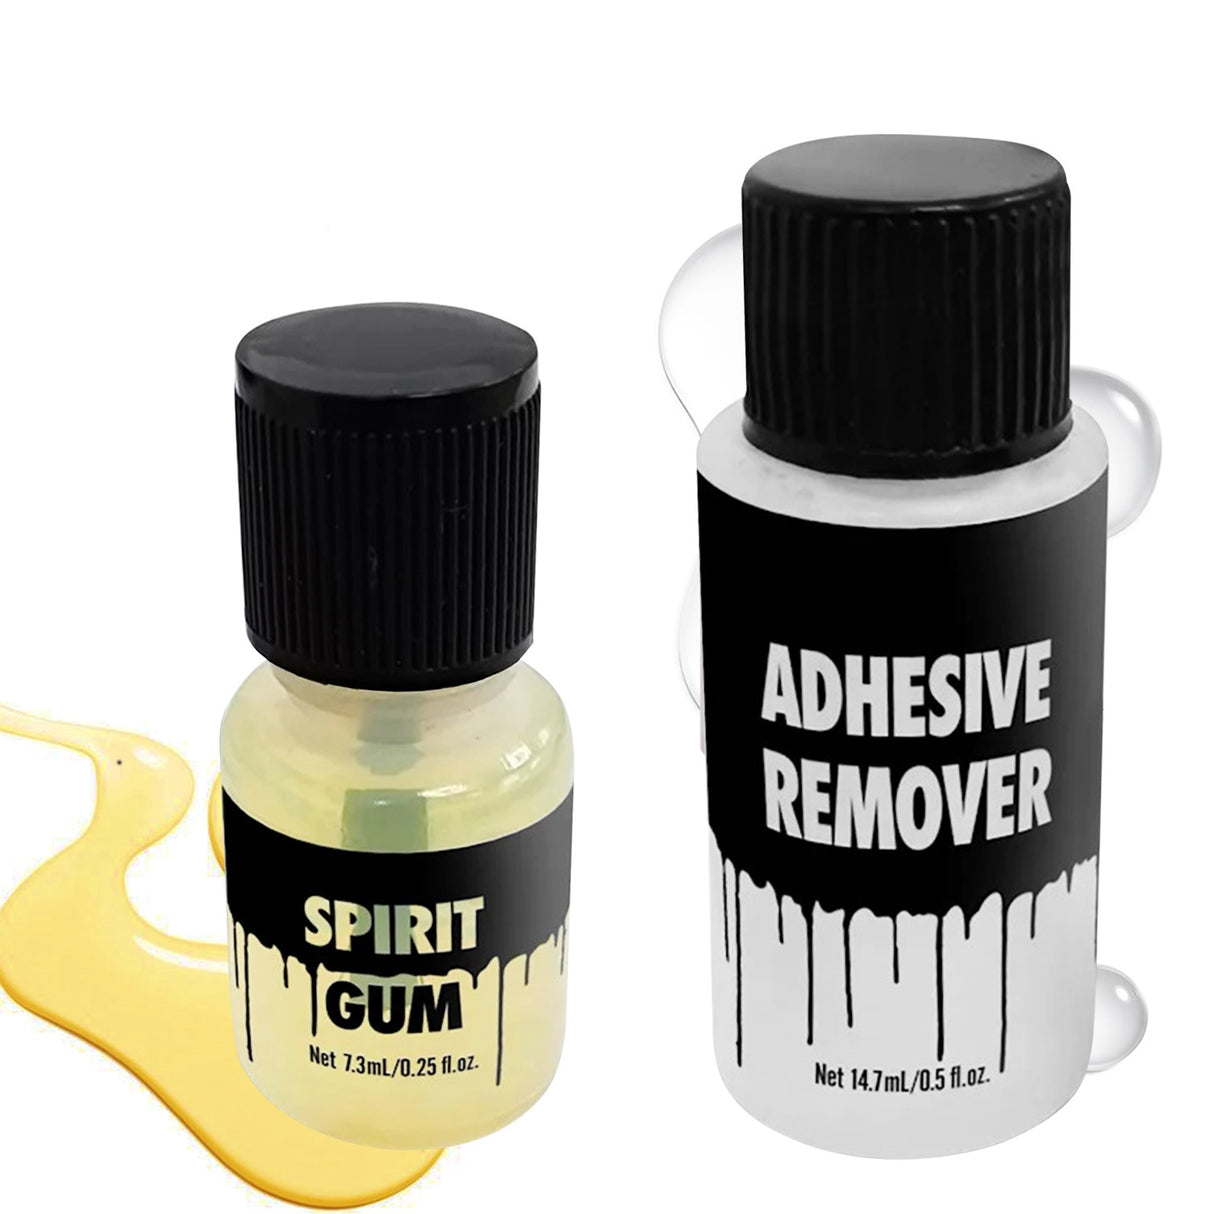 Spirit Gum and Adhesive Remover Kit - Large